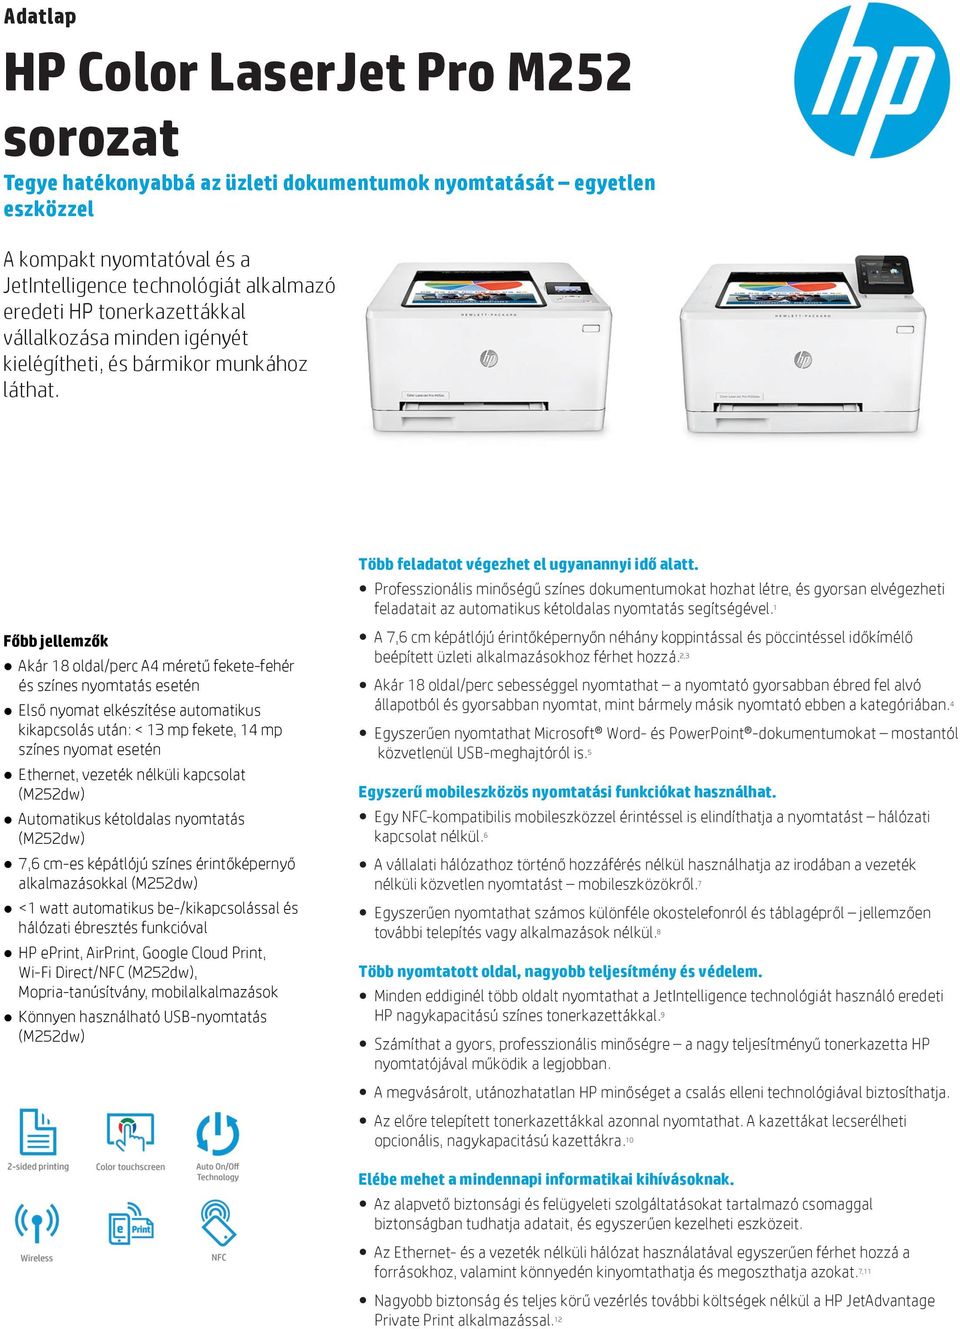 HP Color LaserJet Pro M252 sorozat - PDF Ingyenes letöltés